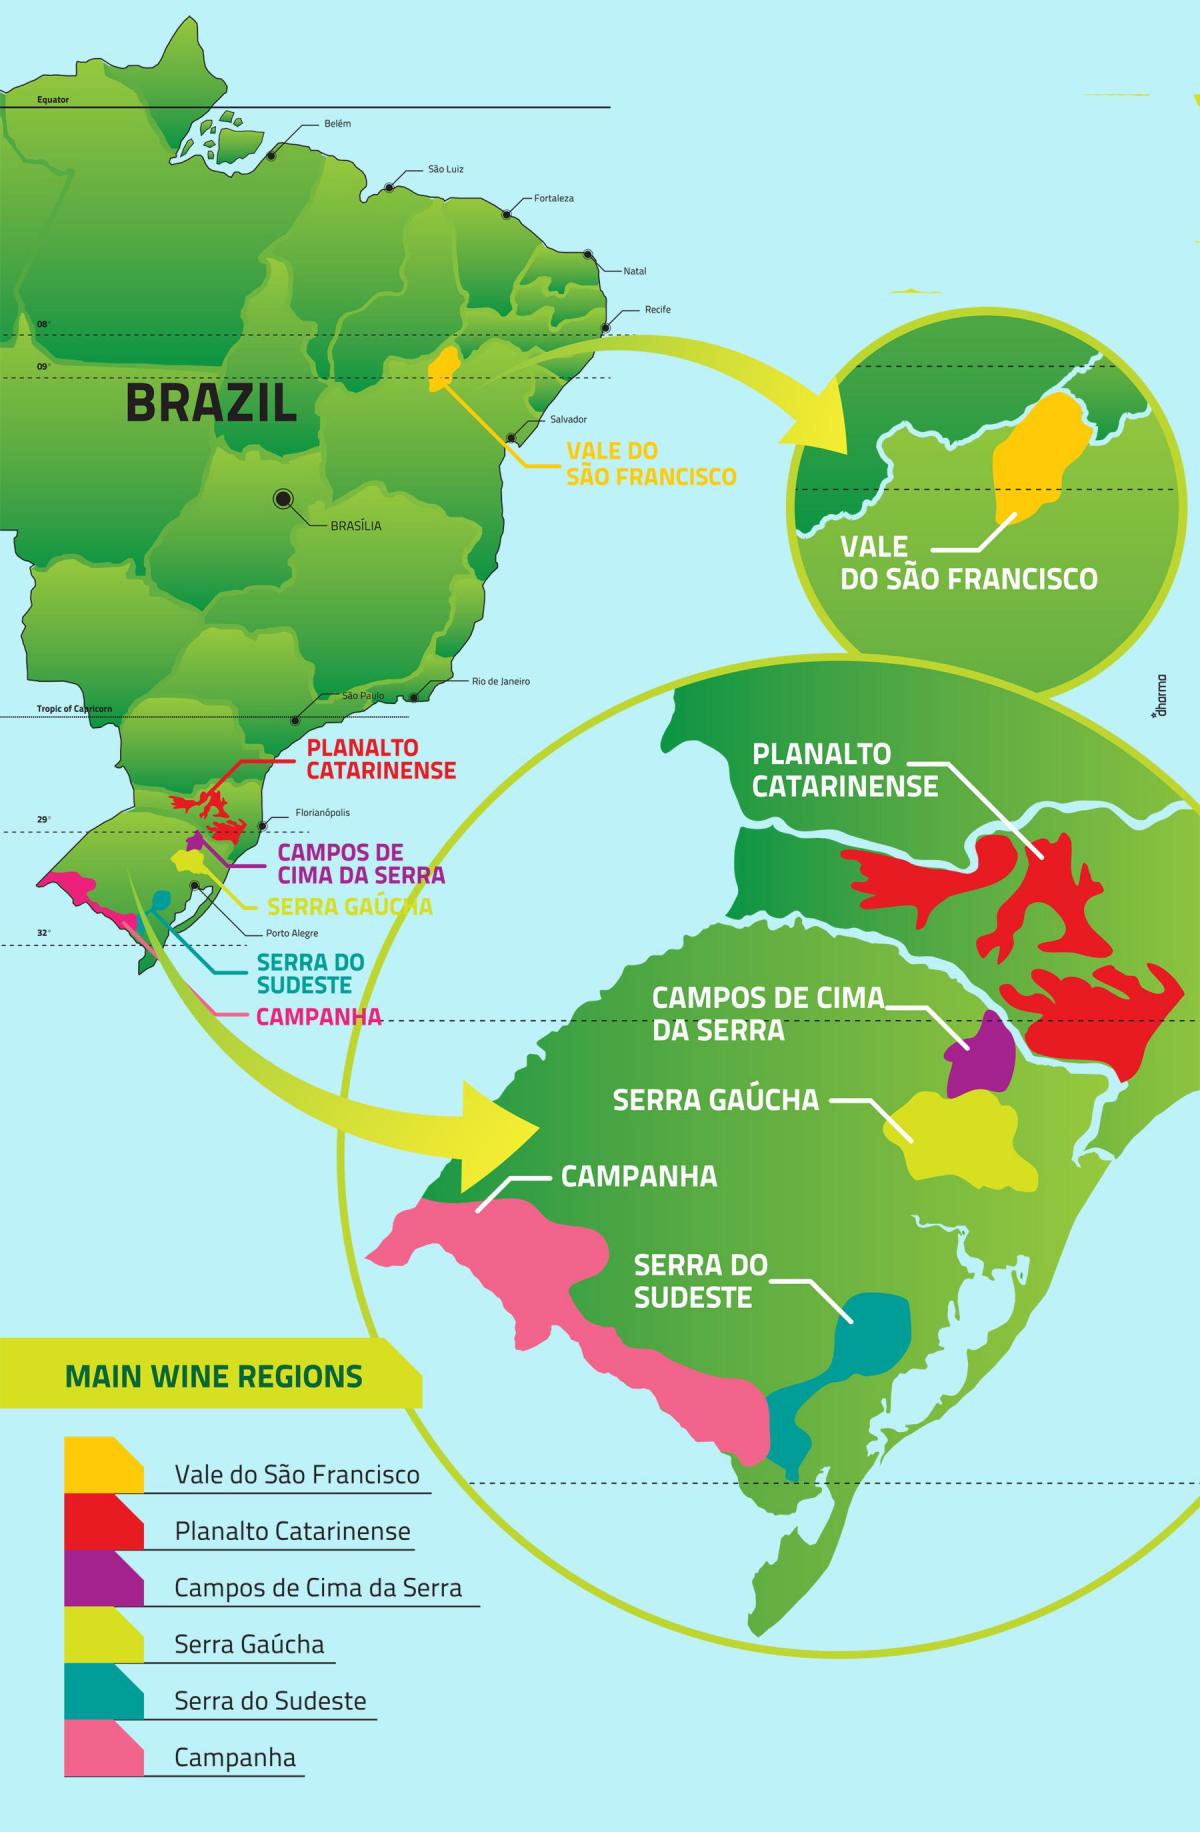 Brazil vineyards map